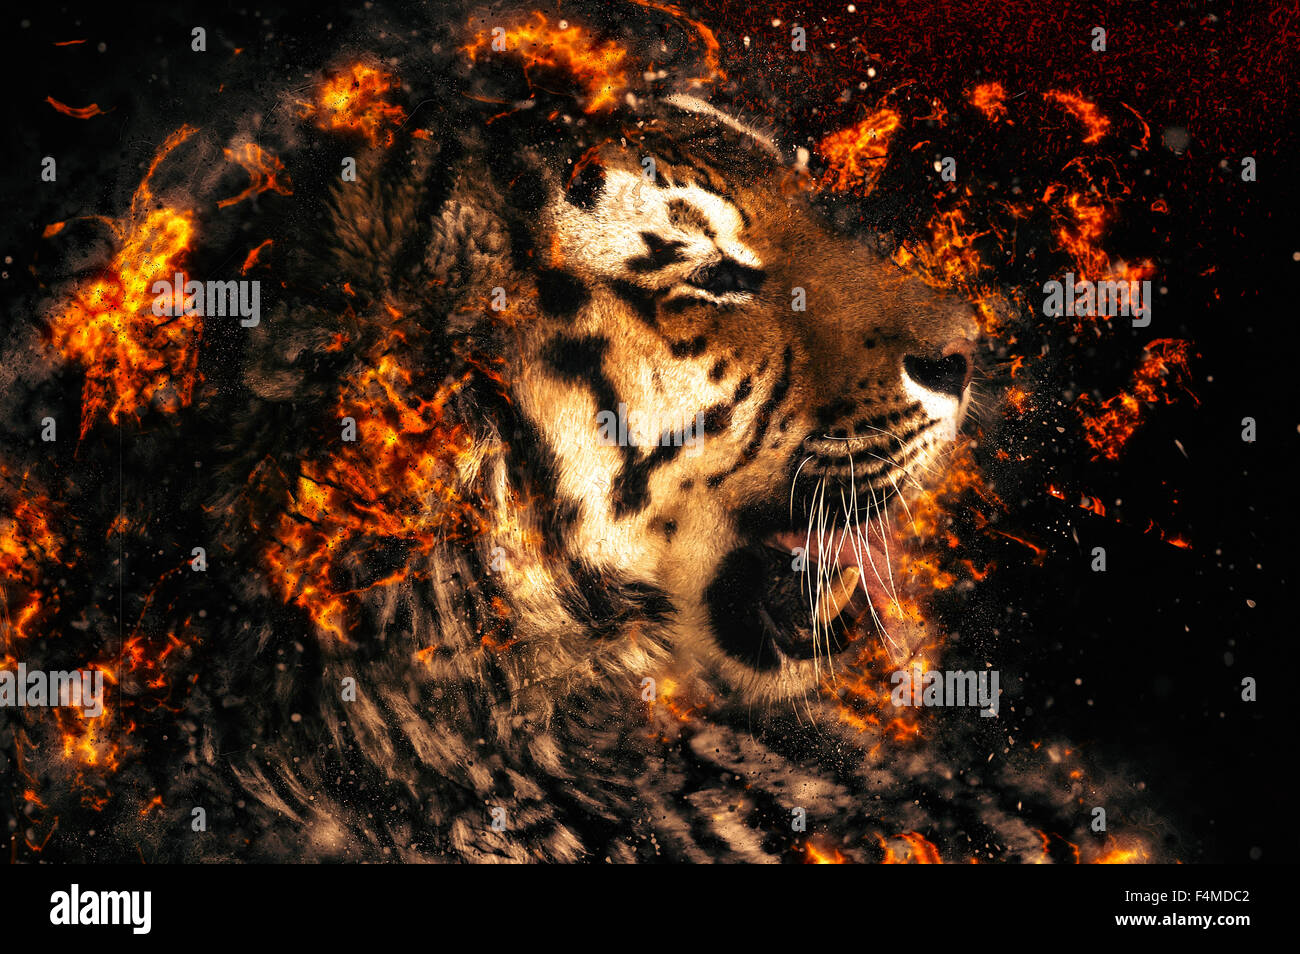 Beautiful Asian tiger, fire illustration Stock Photo